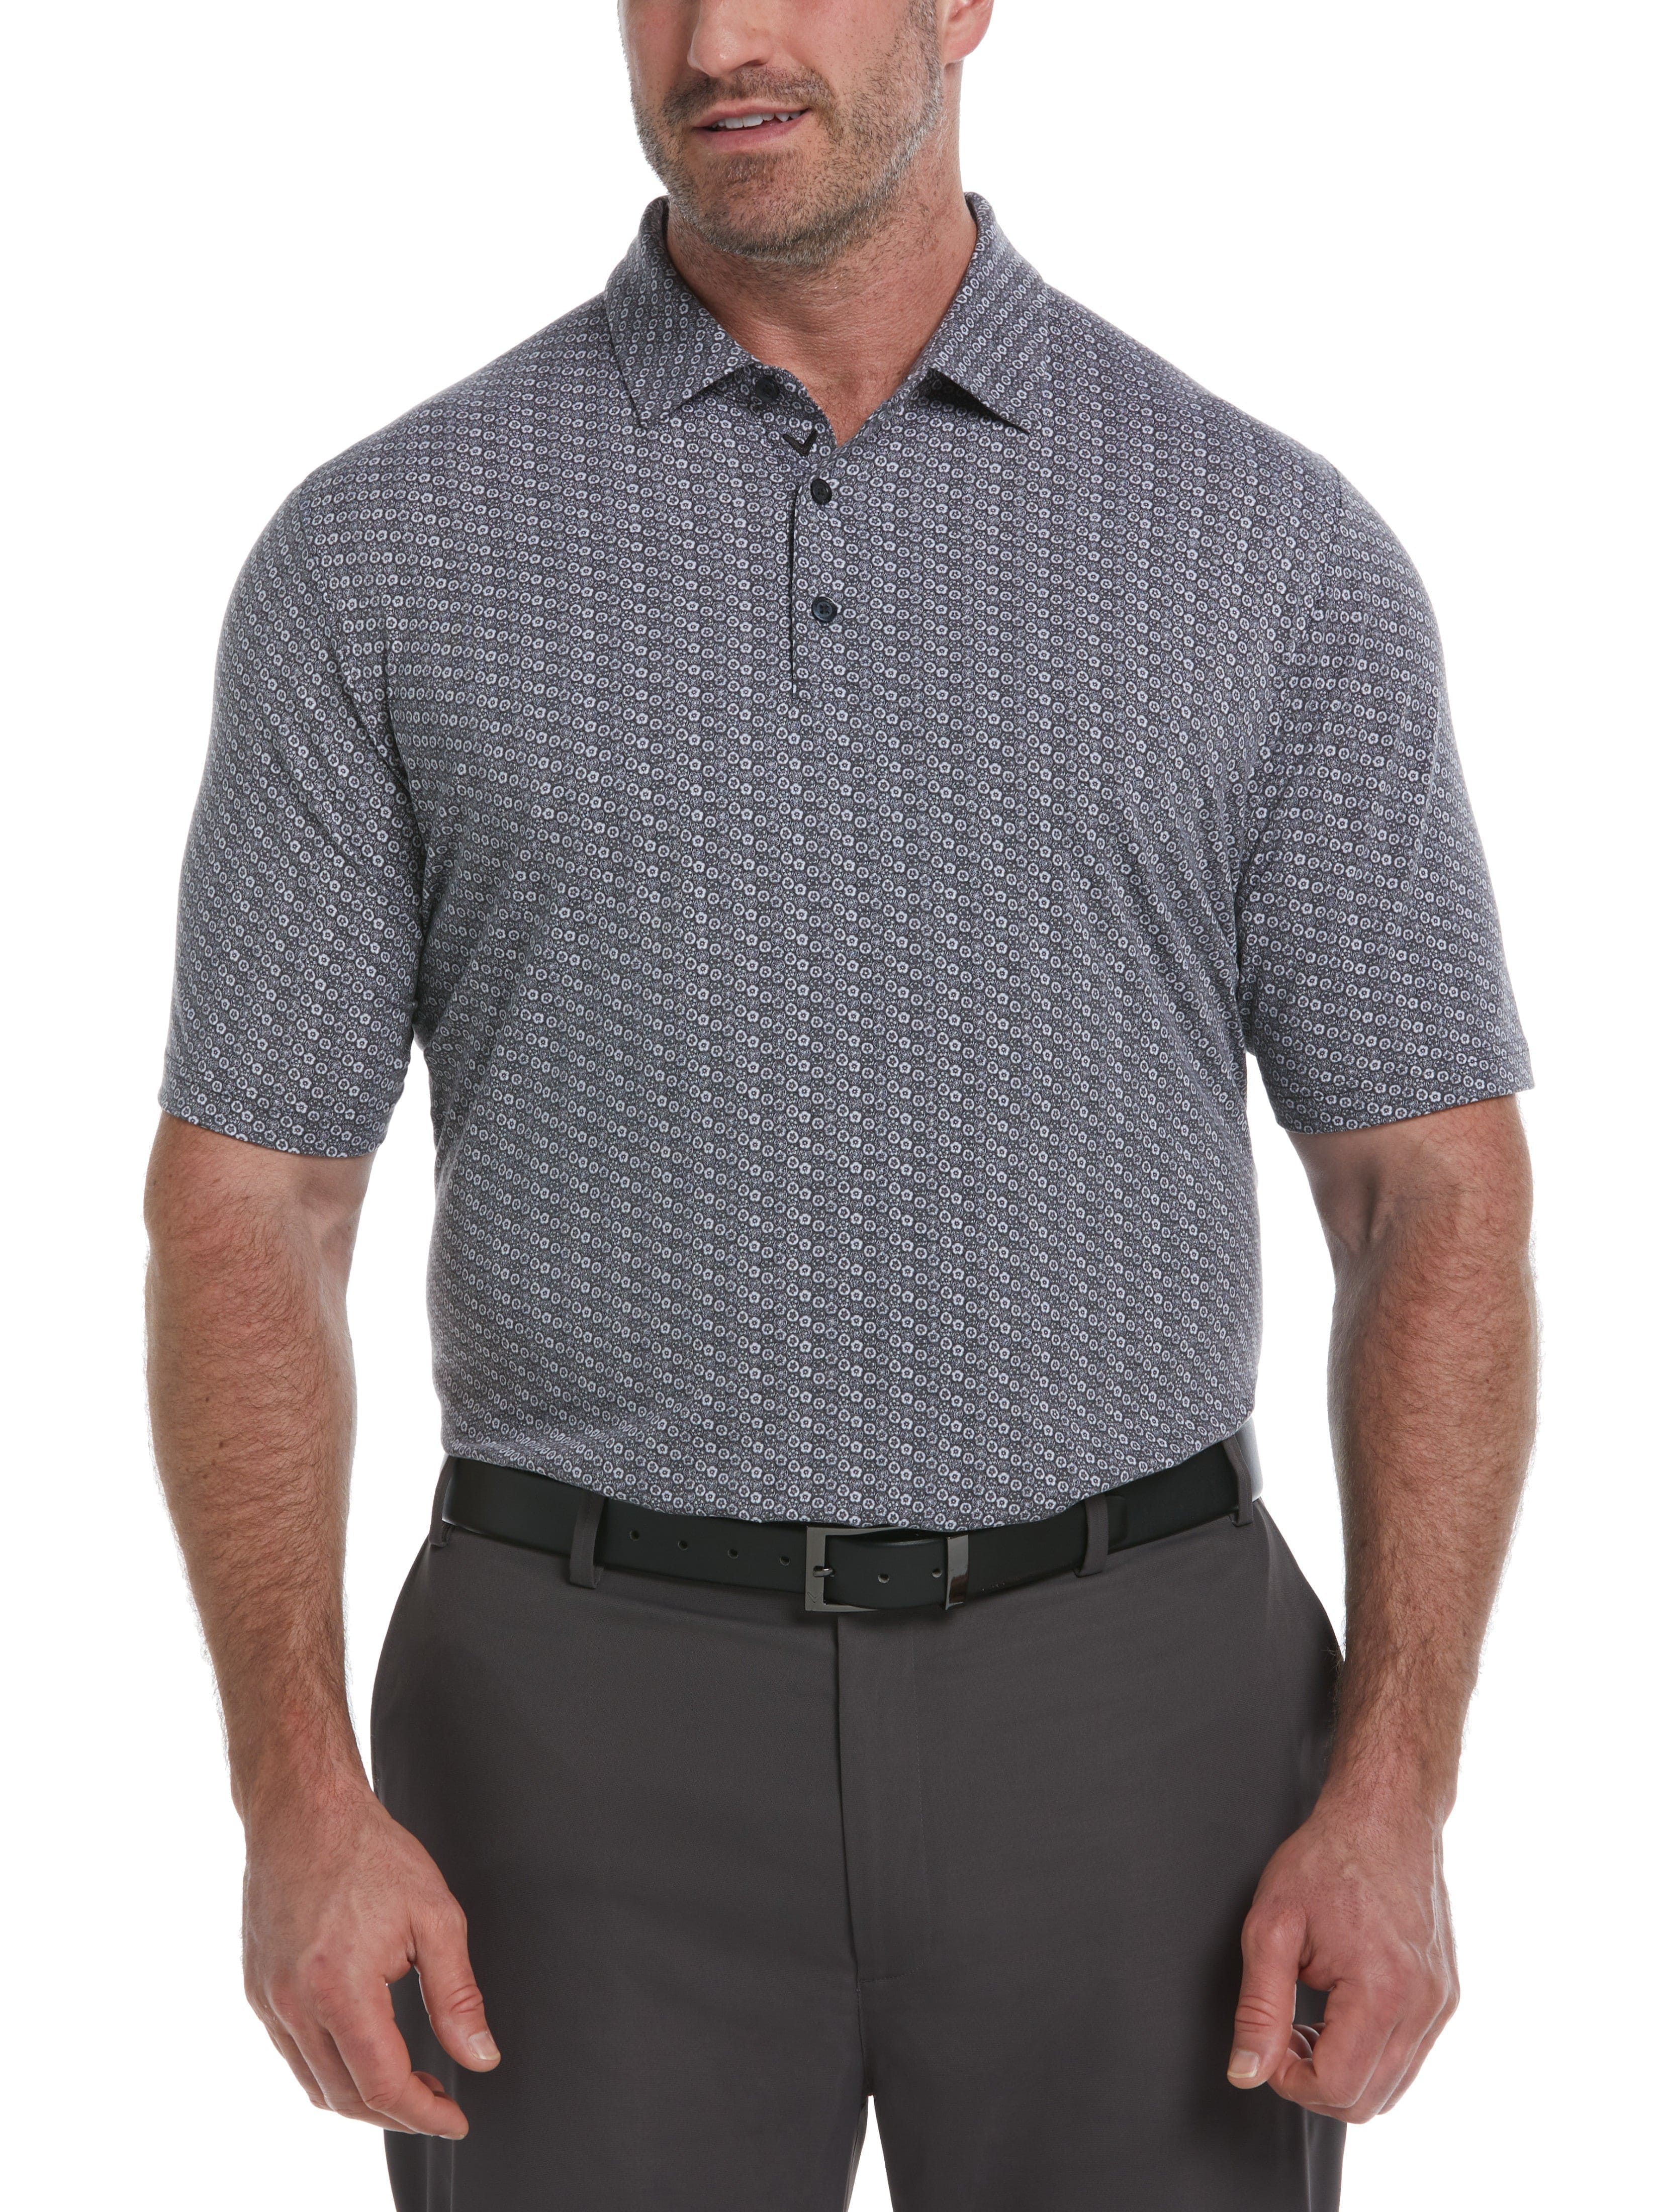 Callaway Apparel Mens Big & Tall Allover Tie Dye Foulard Print Golf Polo Shirt, Size LT, Black, Polyester/Cotton/Elastane | Golf Apparel Shop